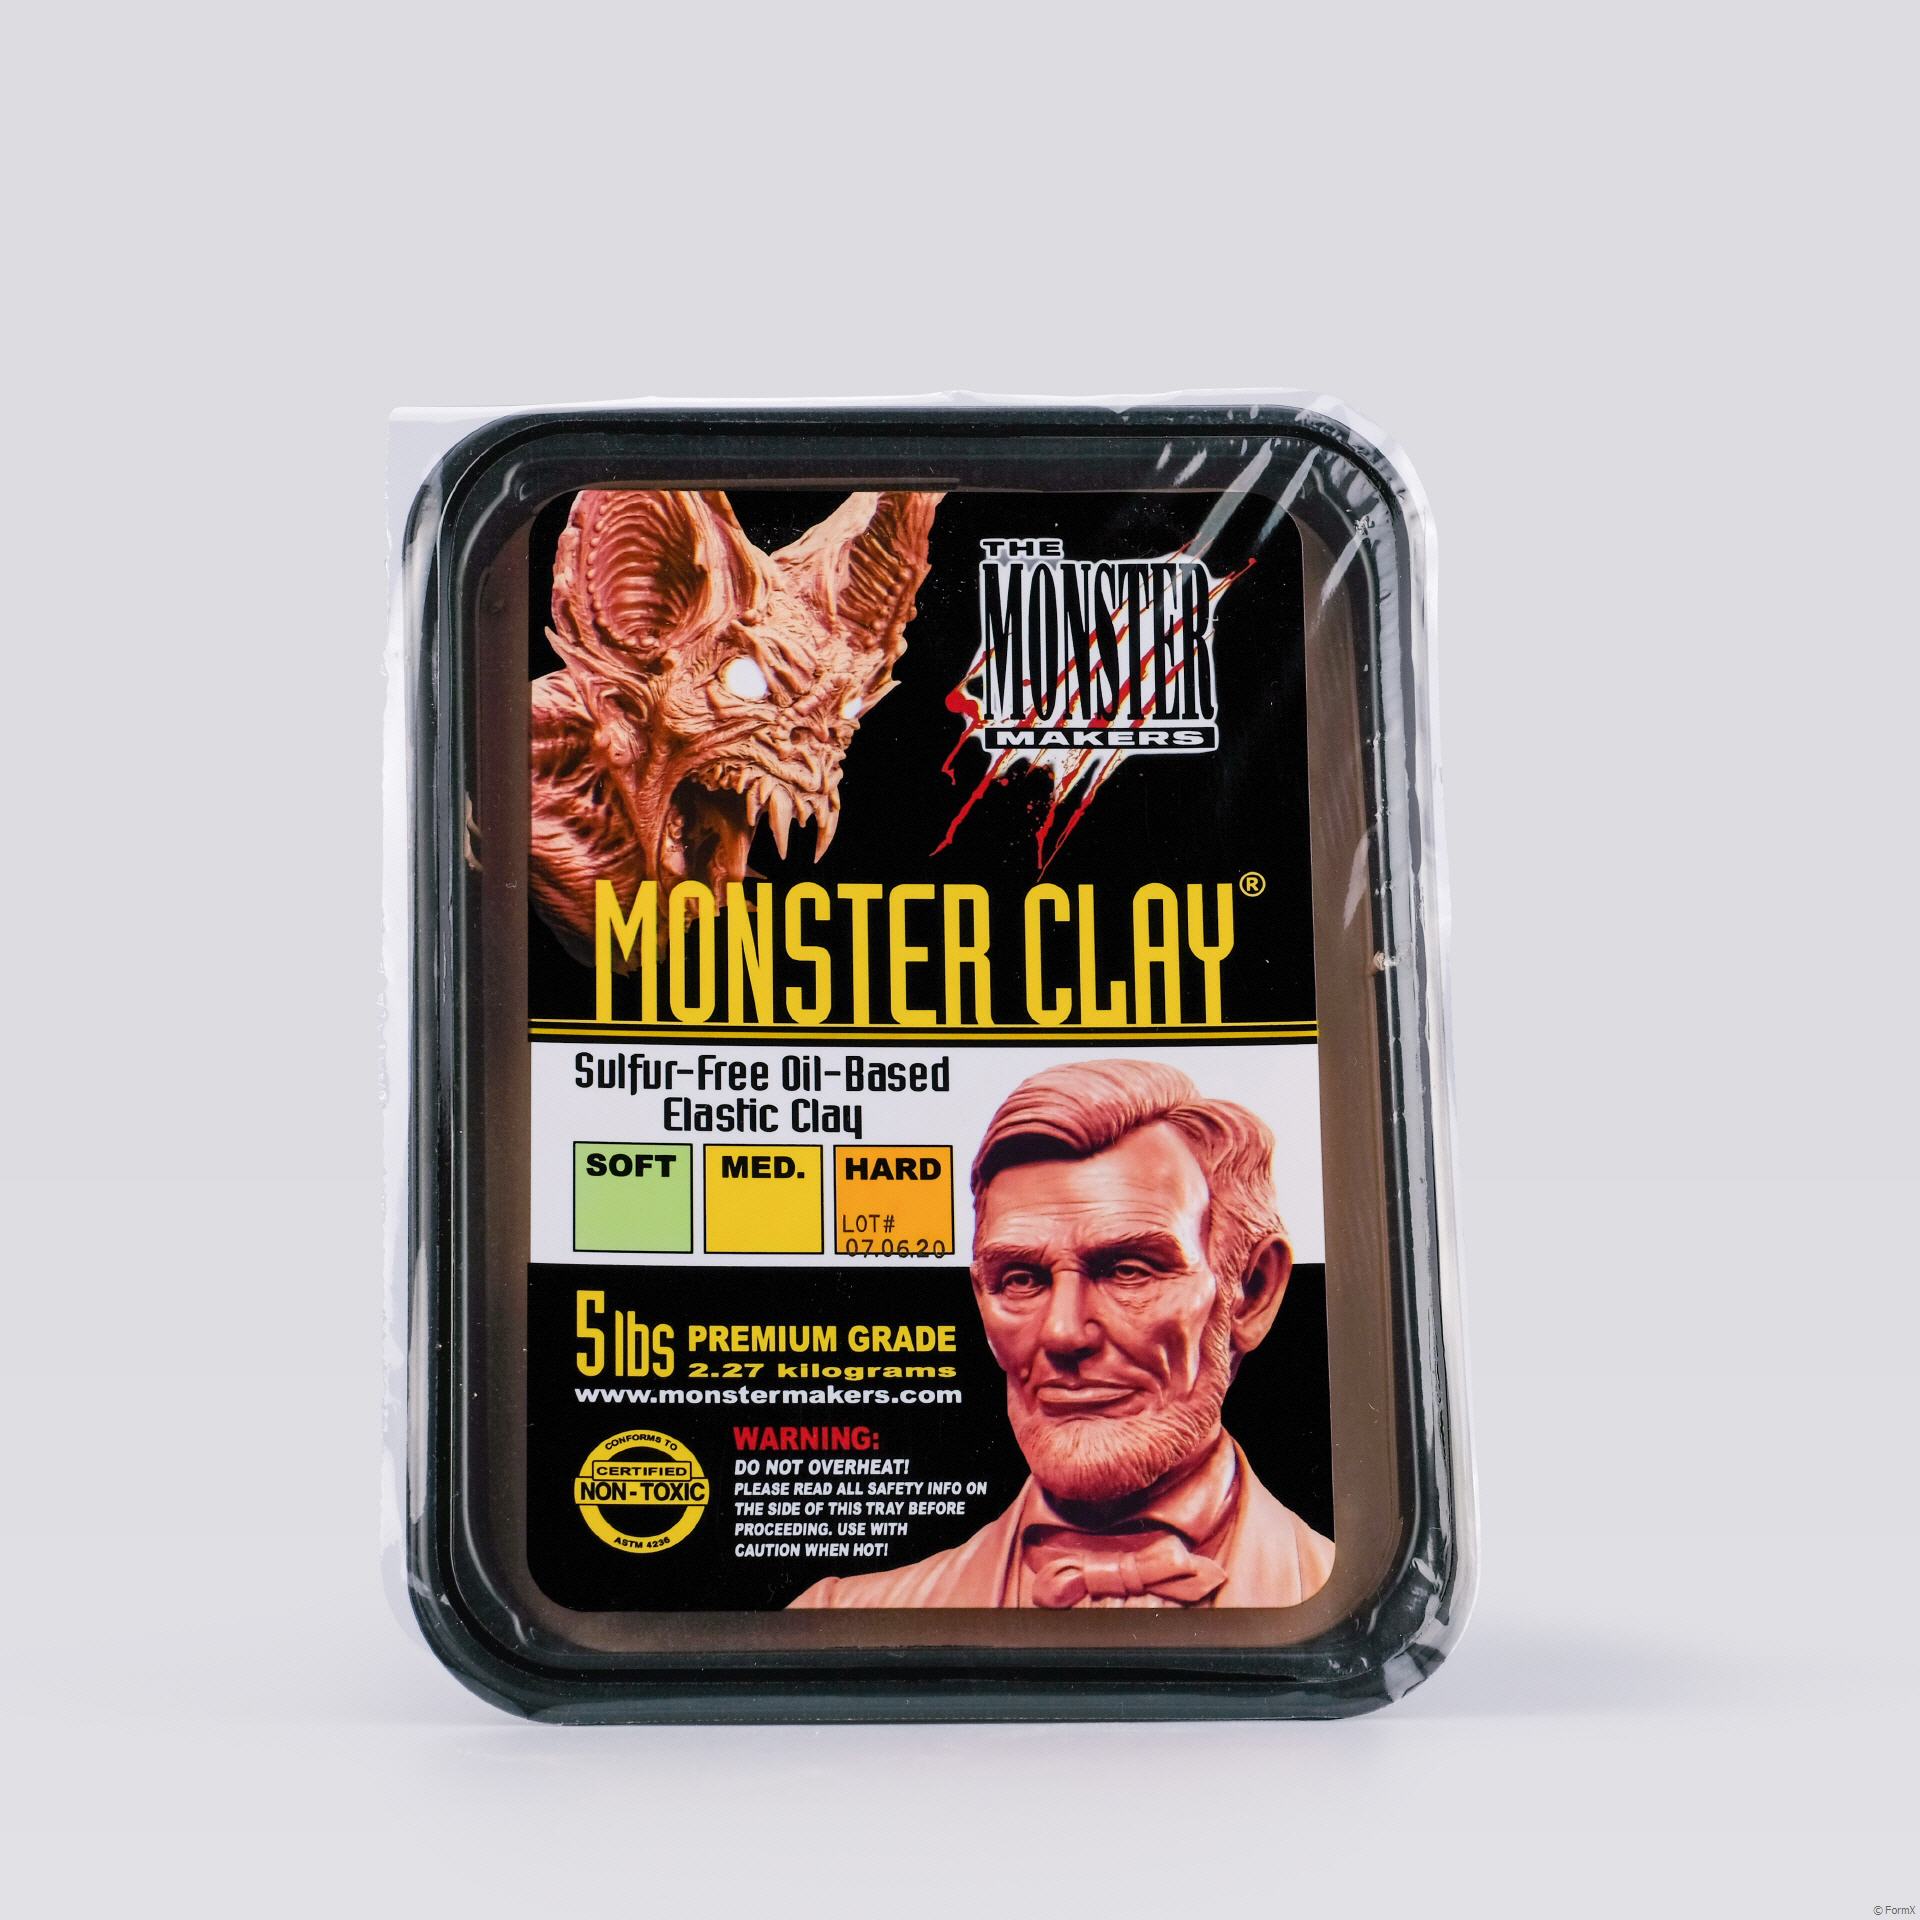 Monster Clay 2.27 kg  Kryolan - Professional Make-up